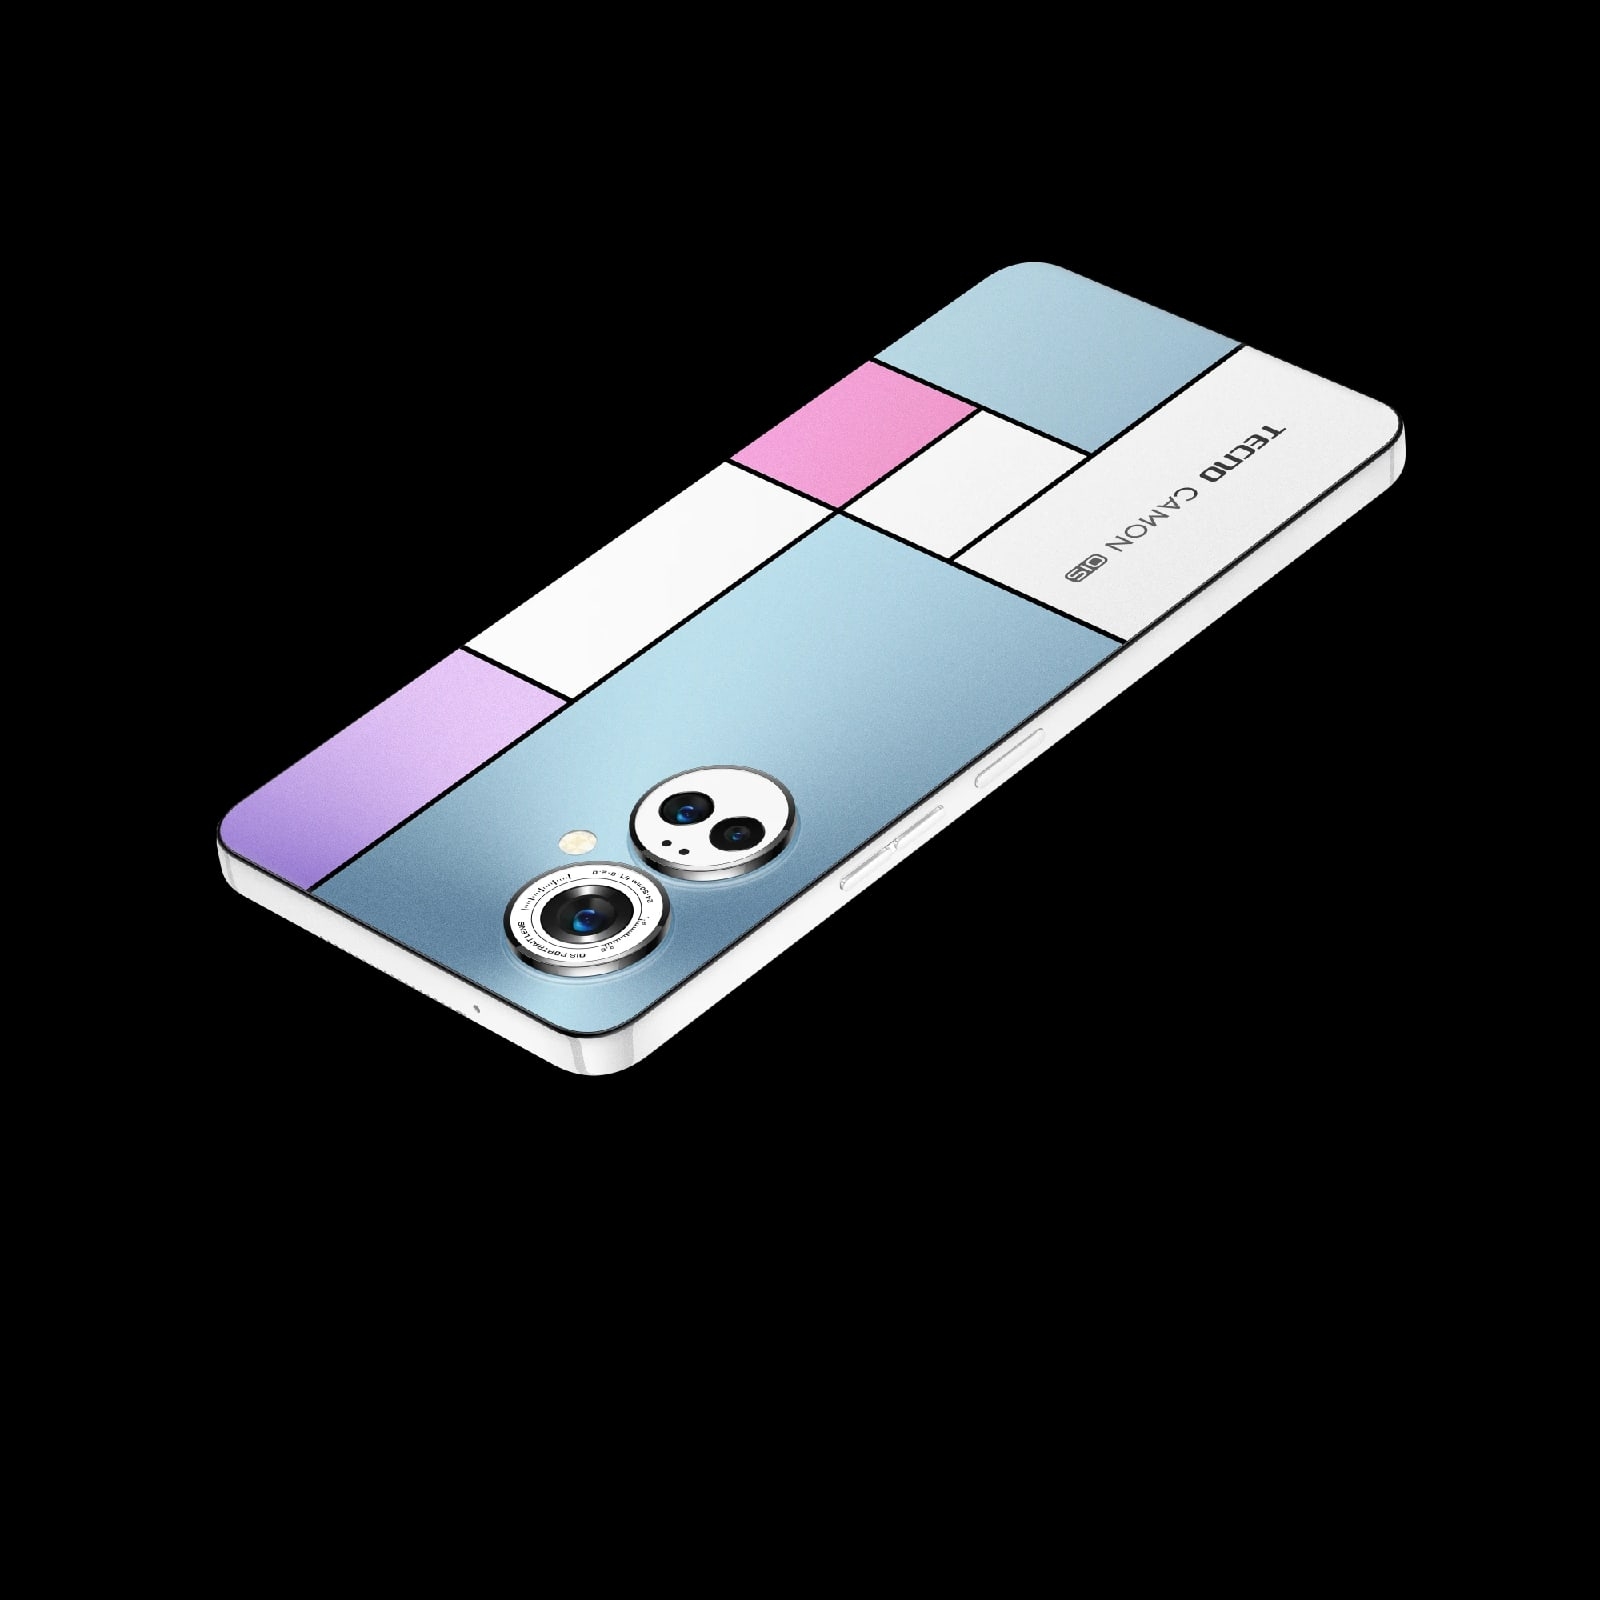 Компанией Tecno представлен смартфон «хамелеон» меняющий расцветки - Camon 19 Pro Mondrian Edition.